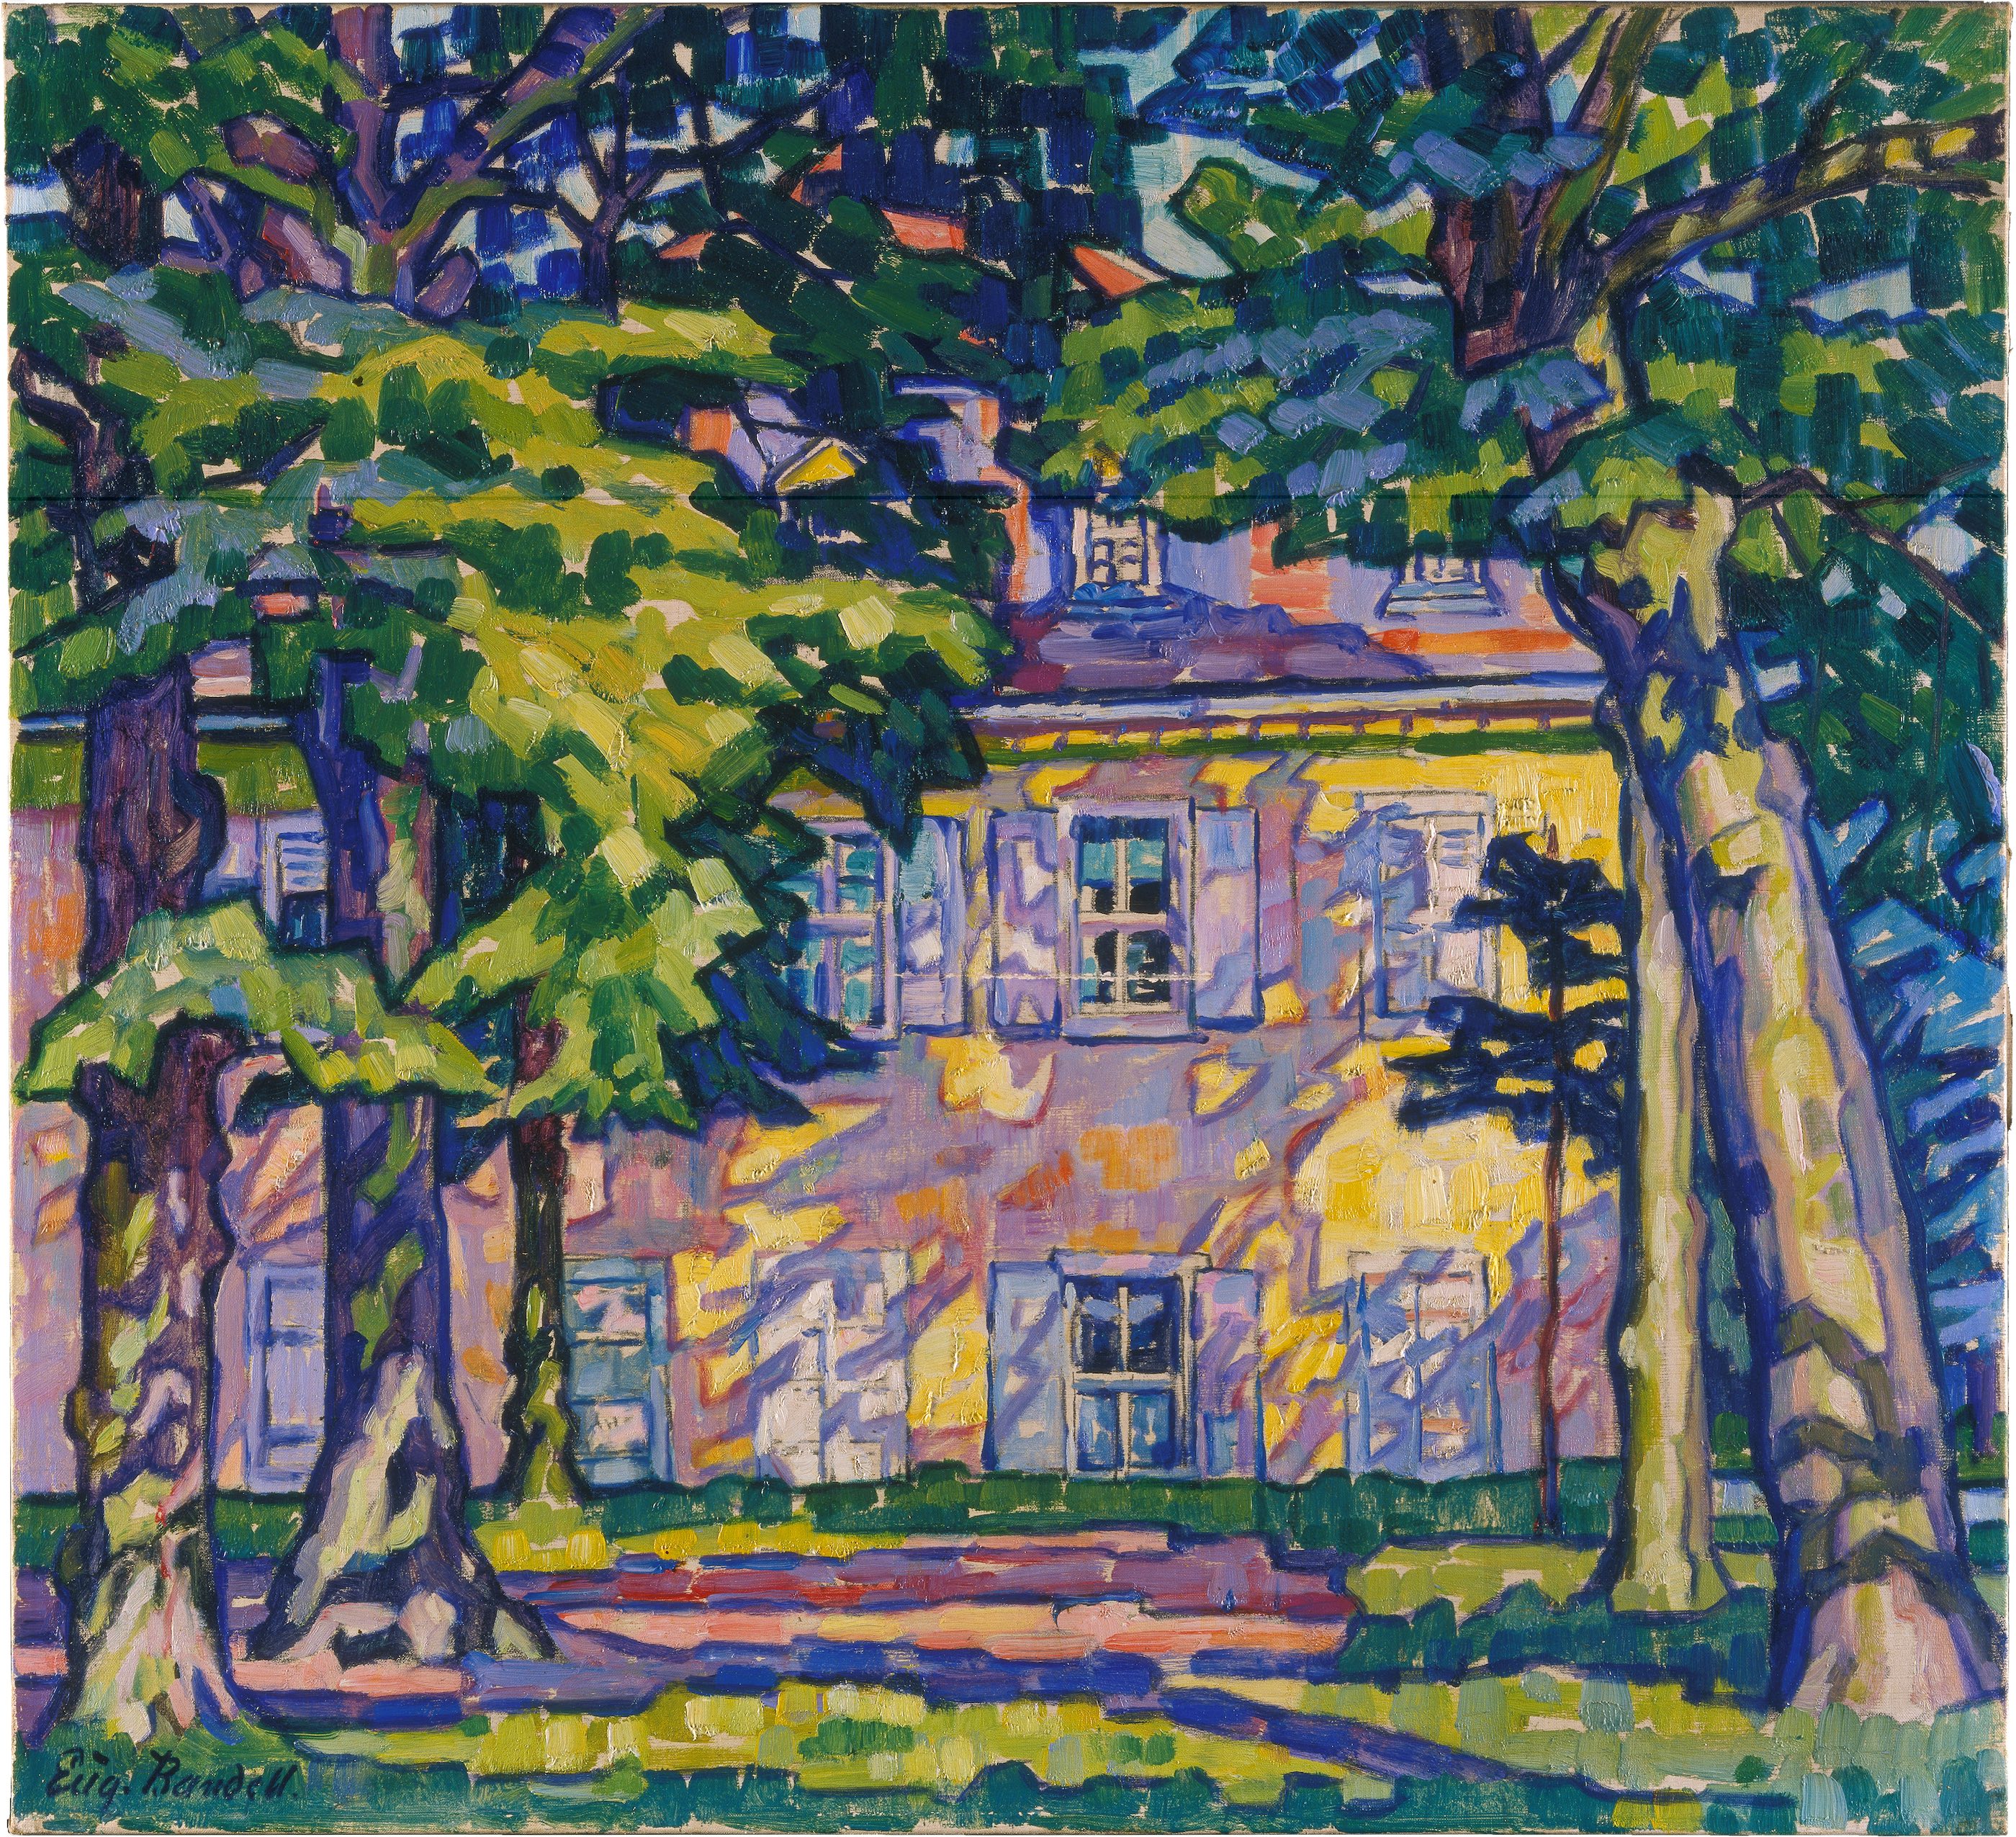 Sol à Tarde by Eugenie Bandell - 1913 - 64,5 x 70,5 cm 